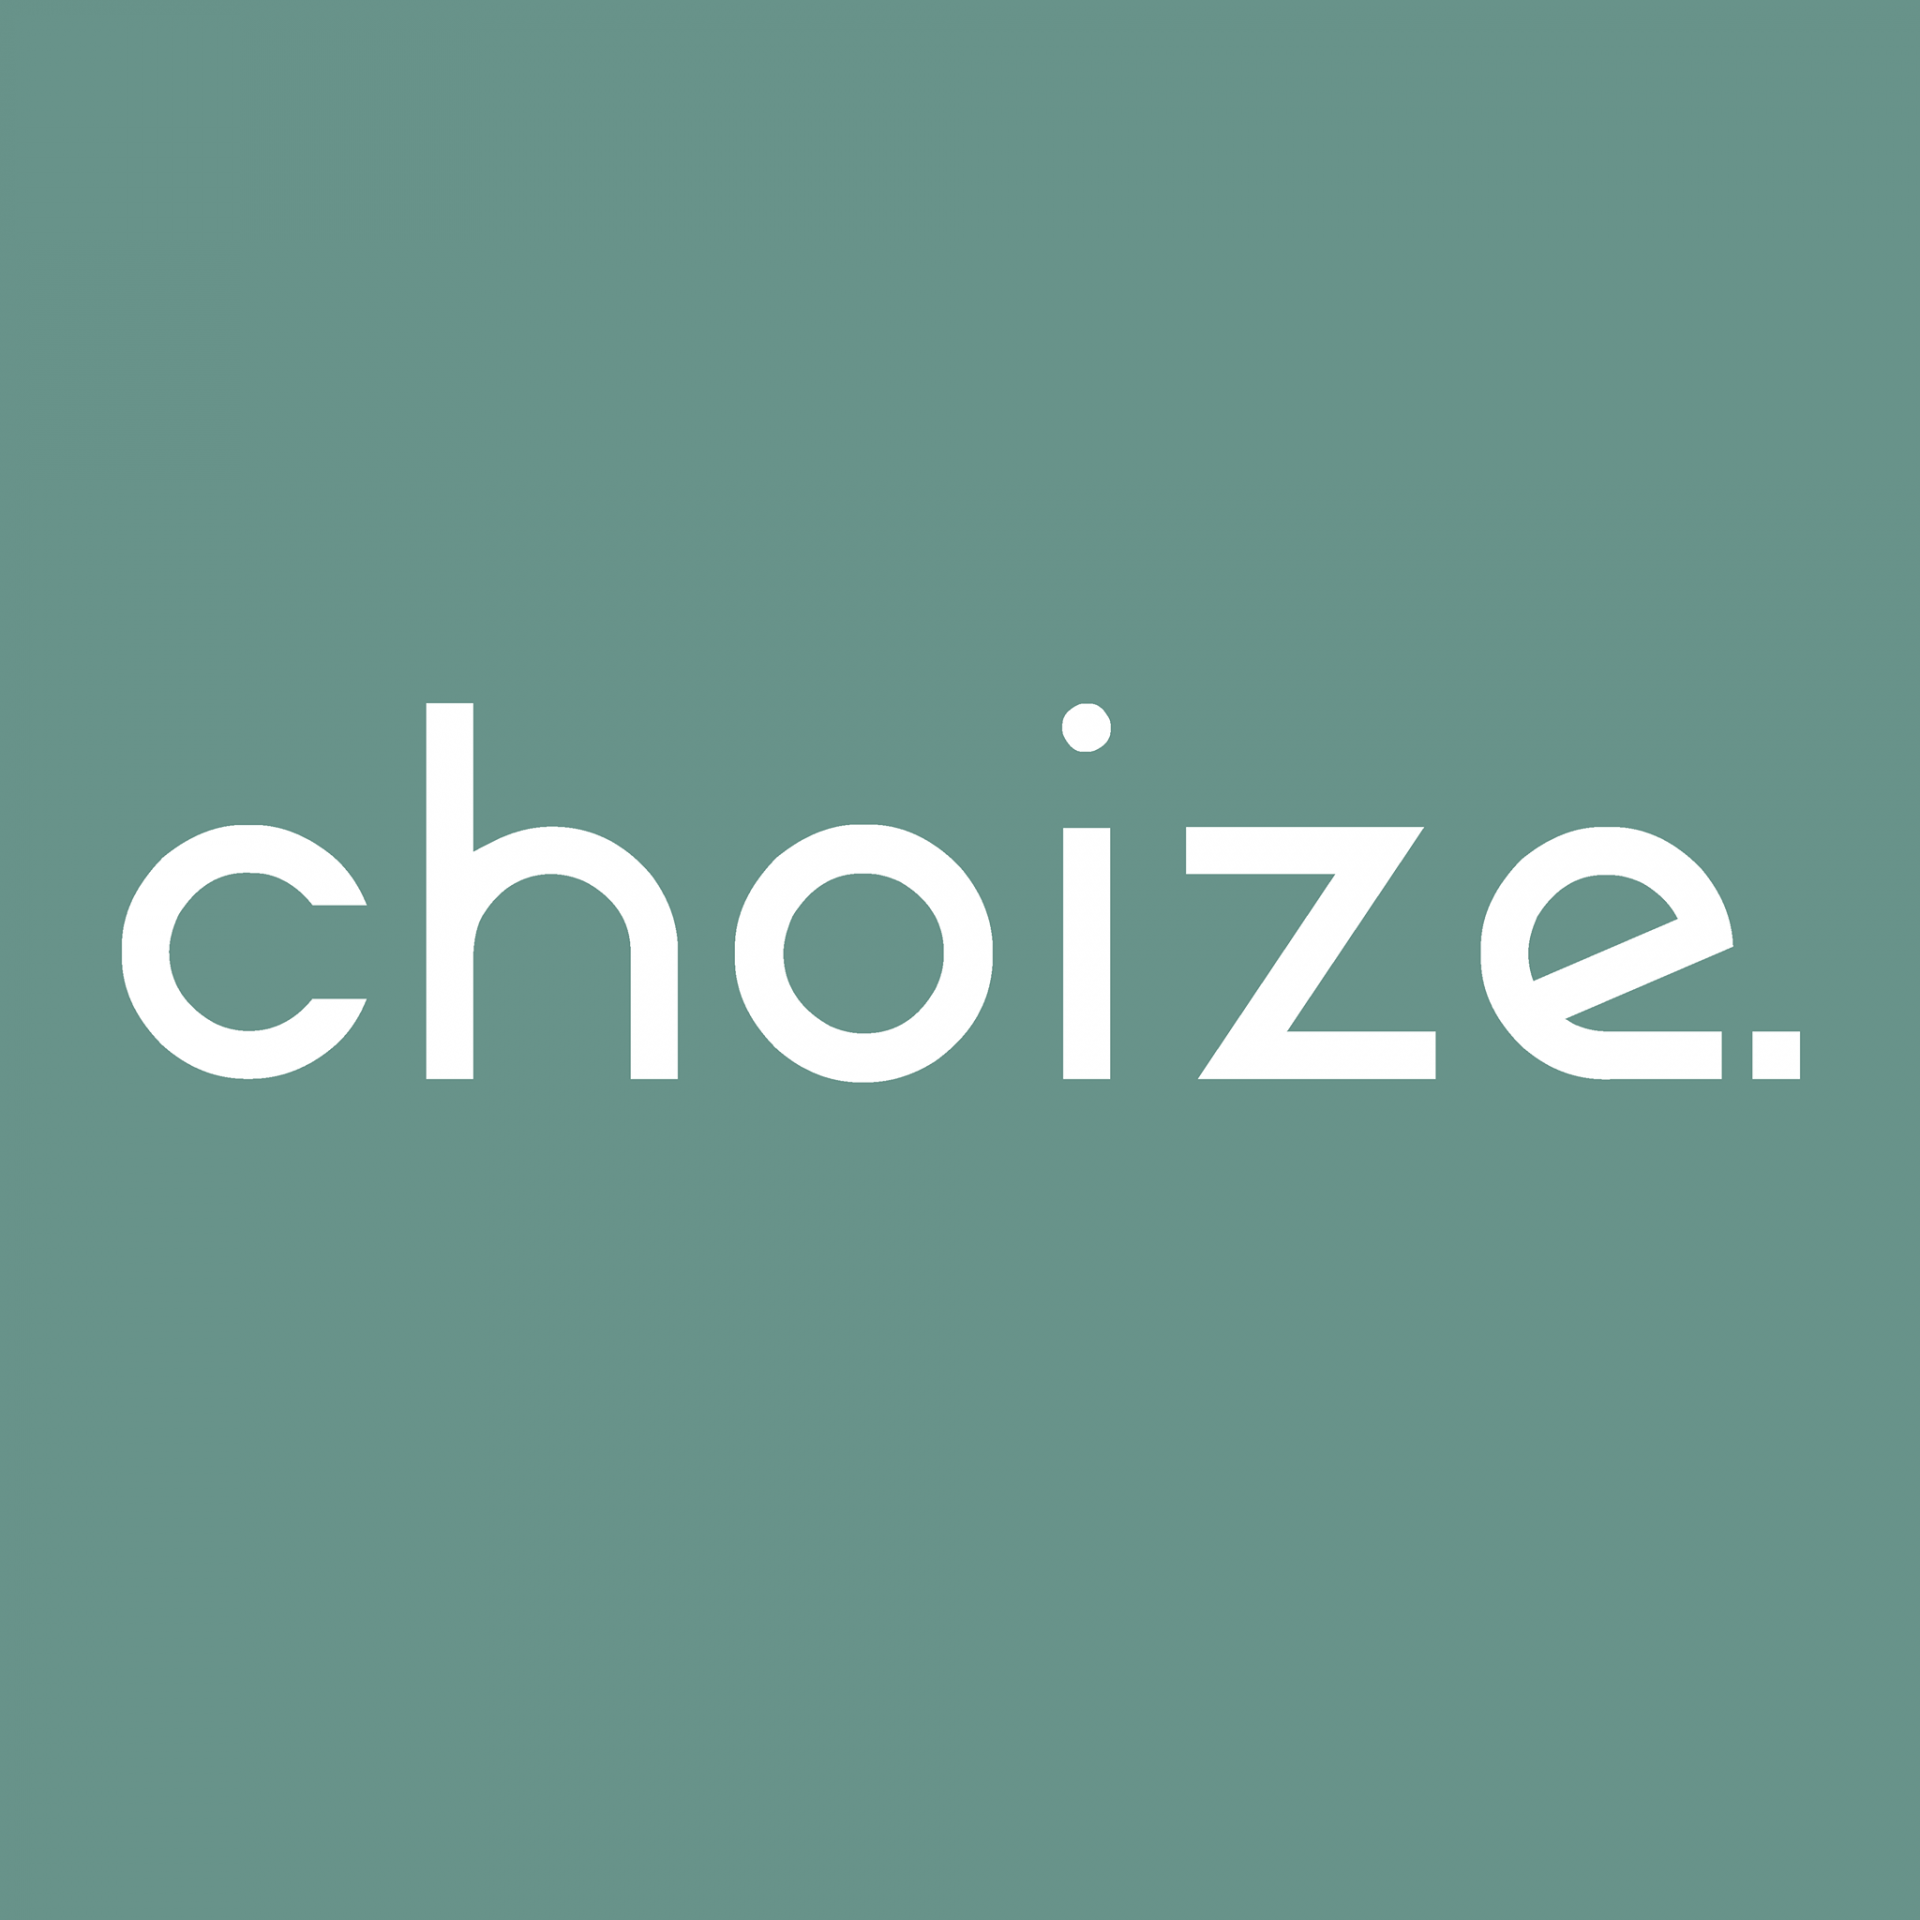 choize